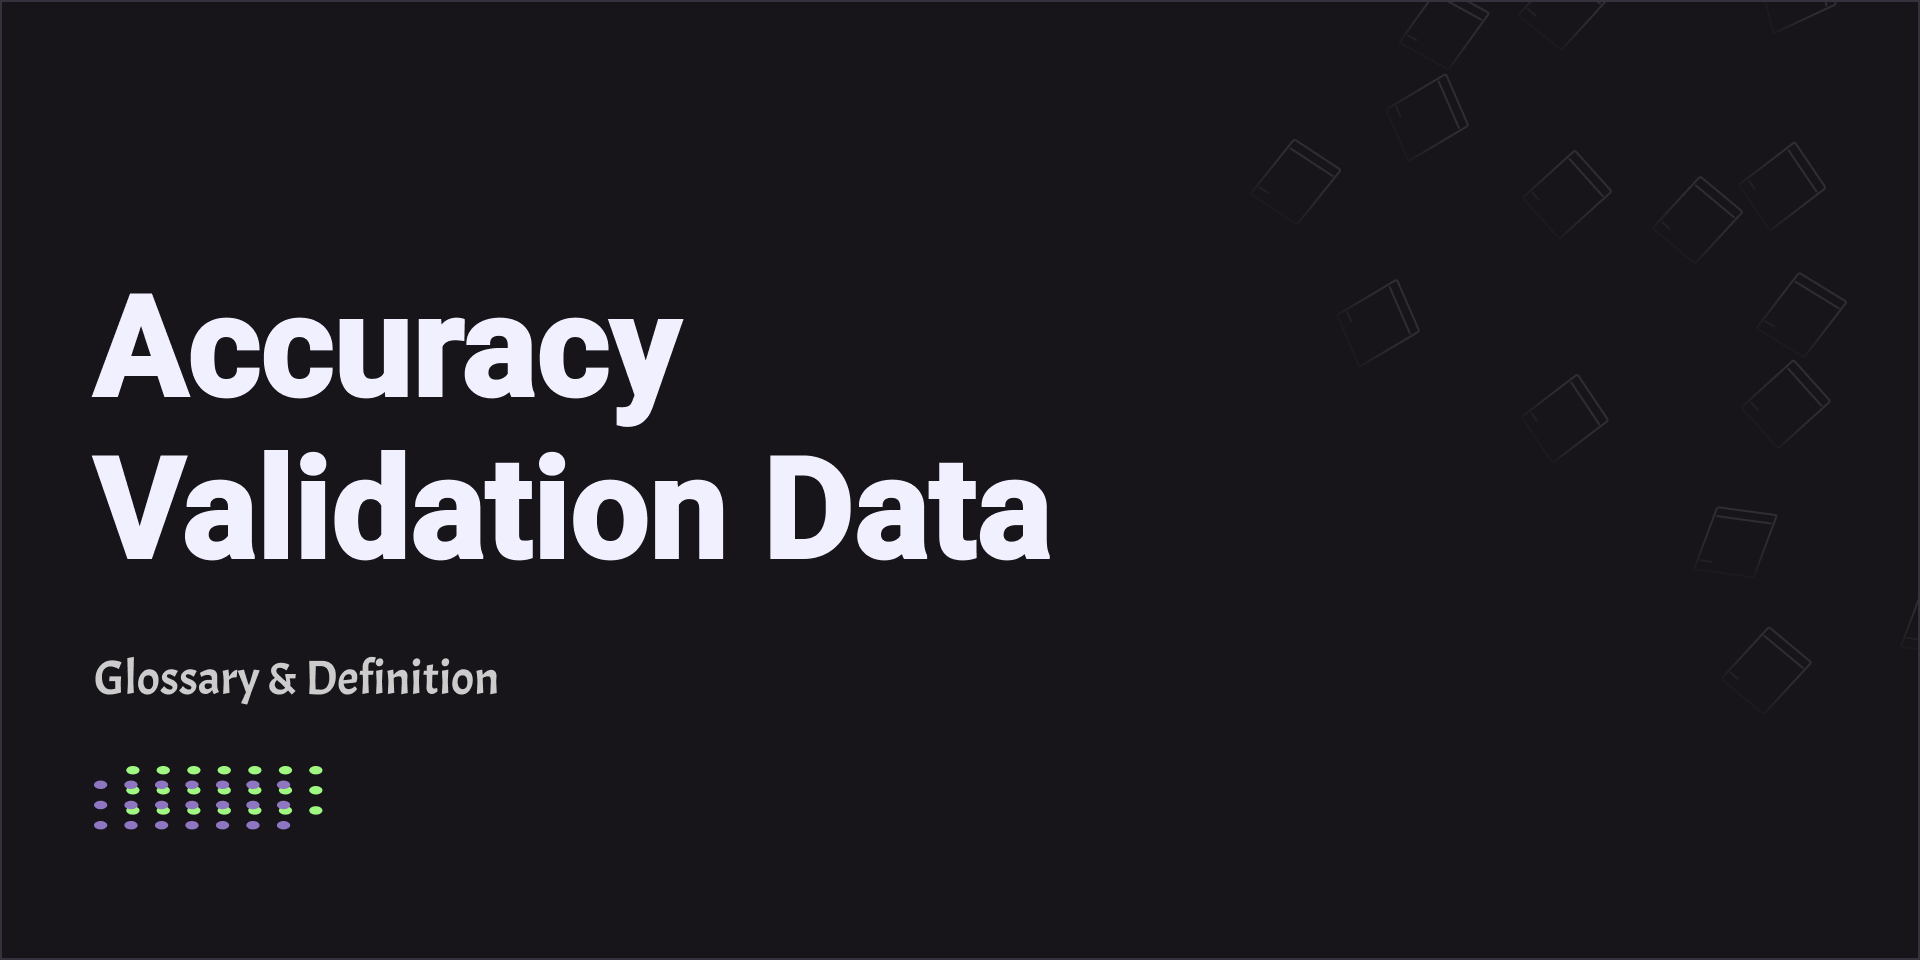 Accuracy Validation Data